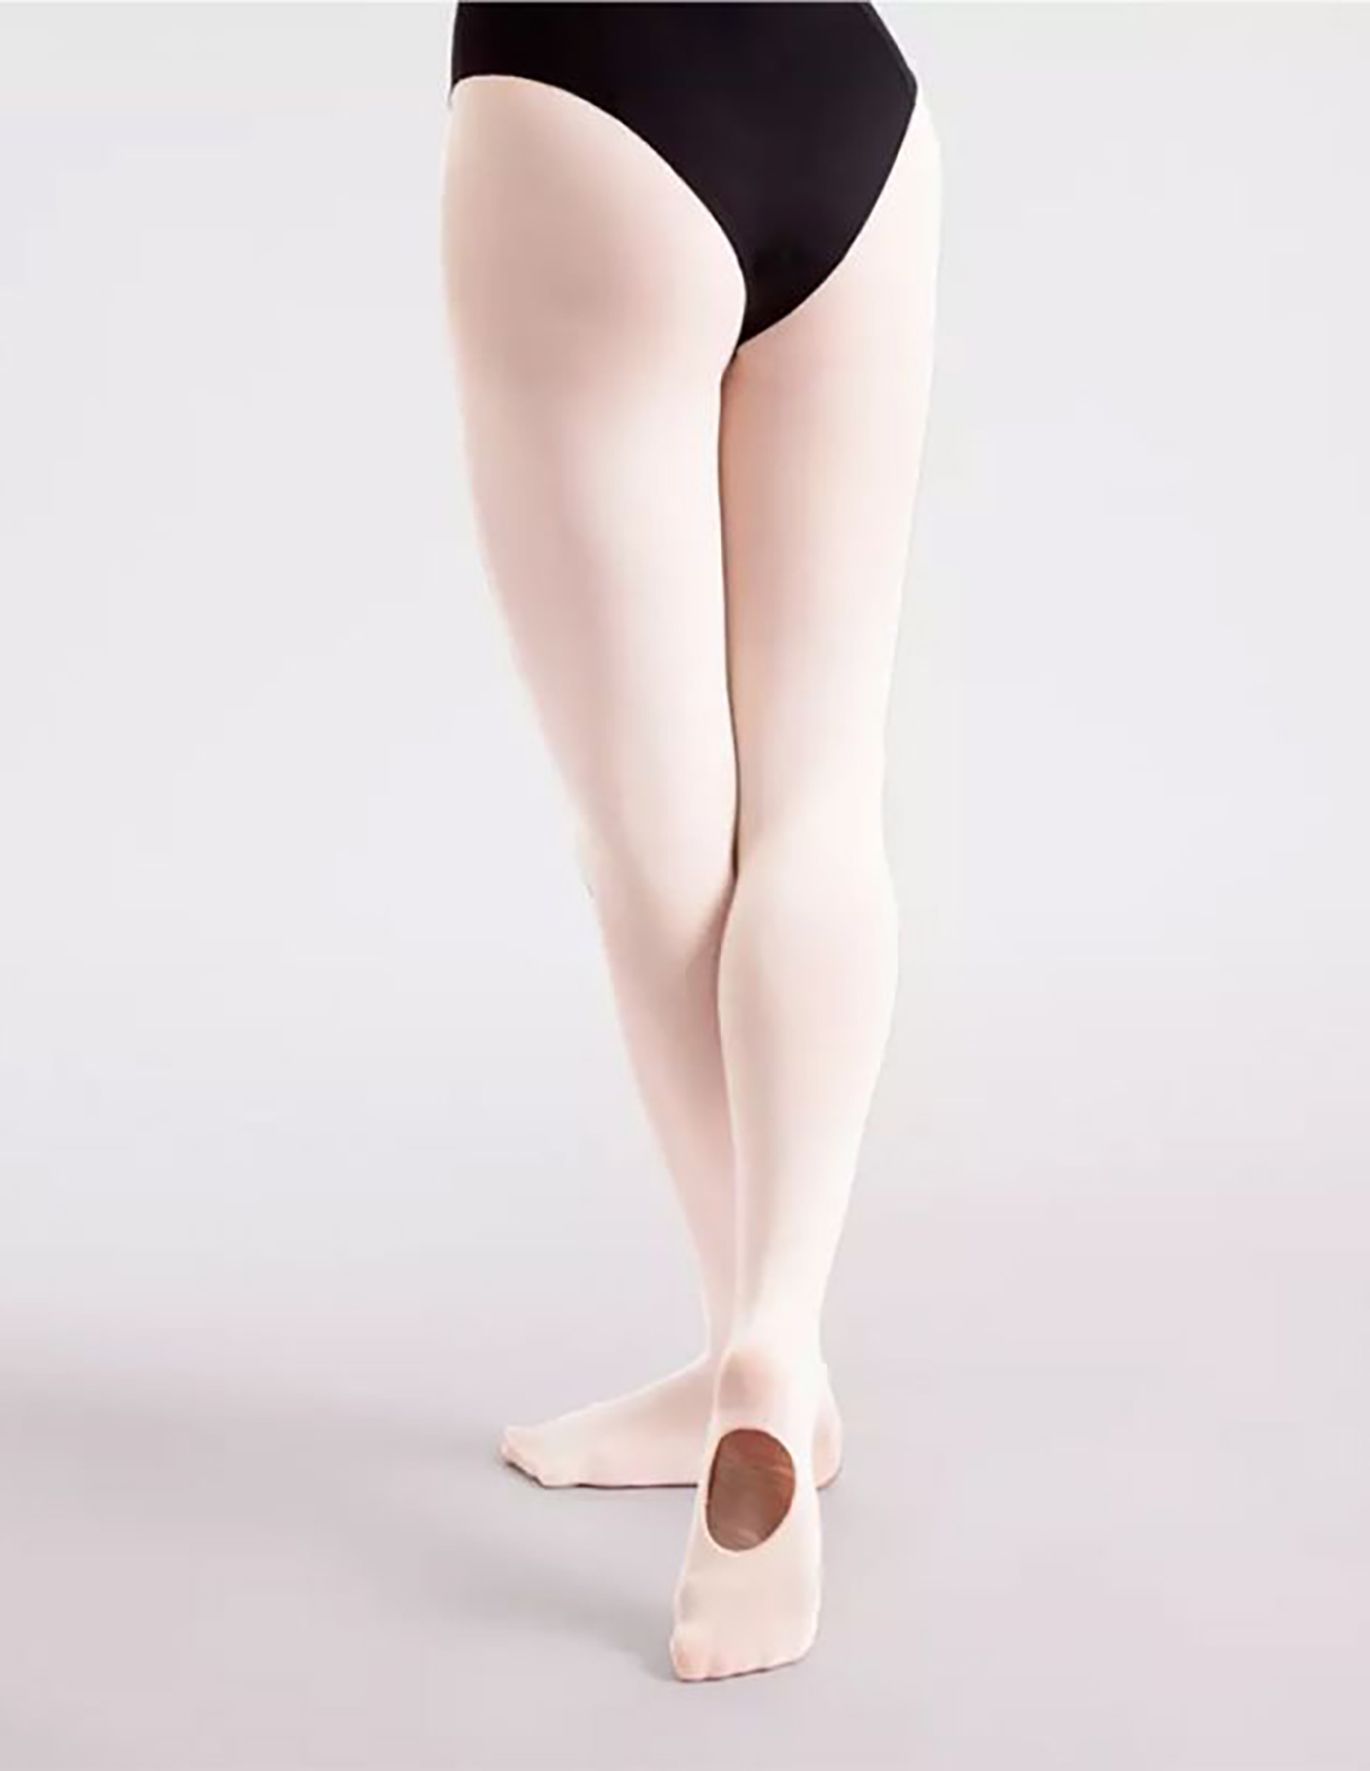 Silky Dance Intermediate Convertible Ballet Dance Tights